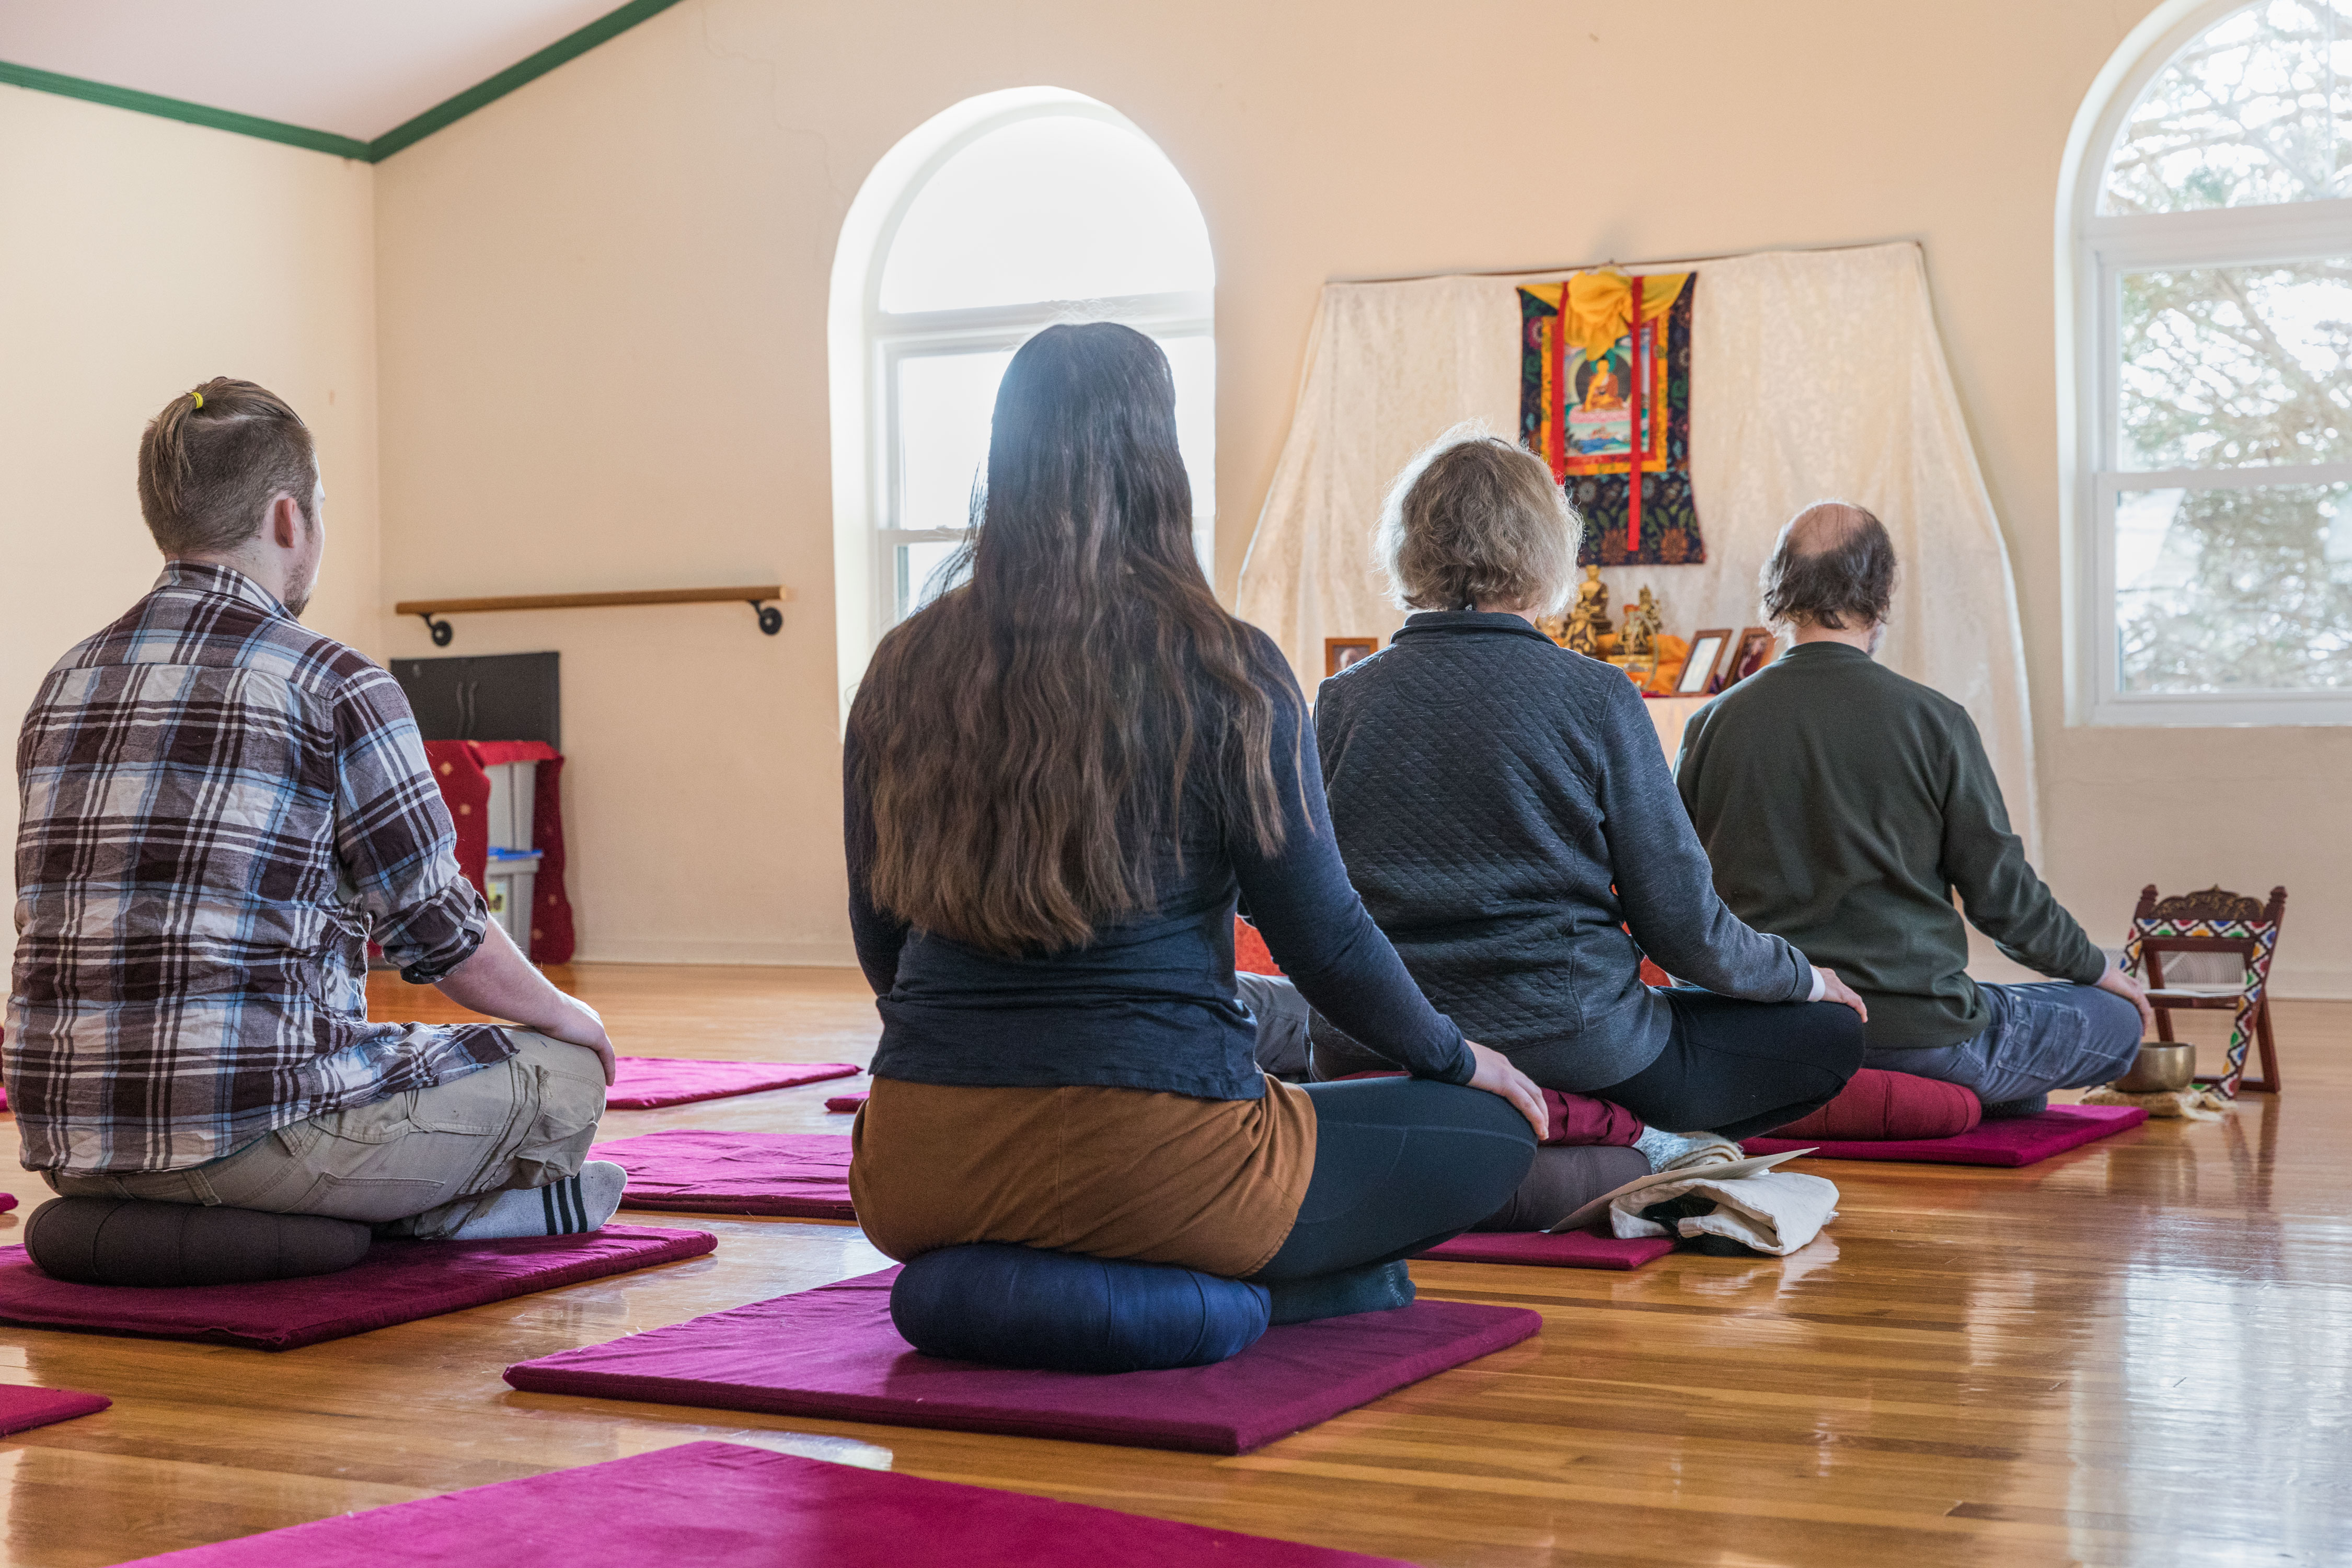 Athens KTC members meditate together.